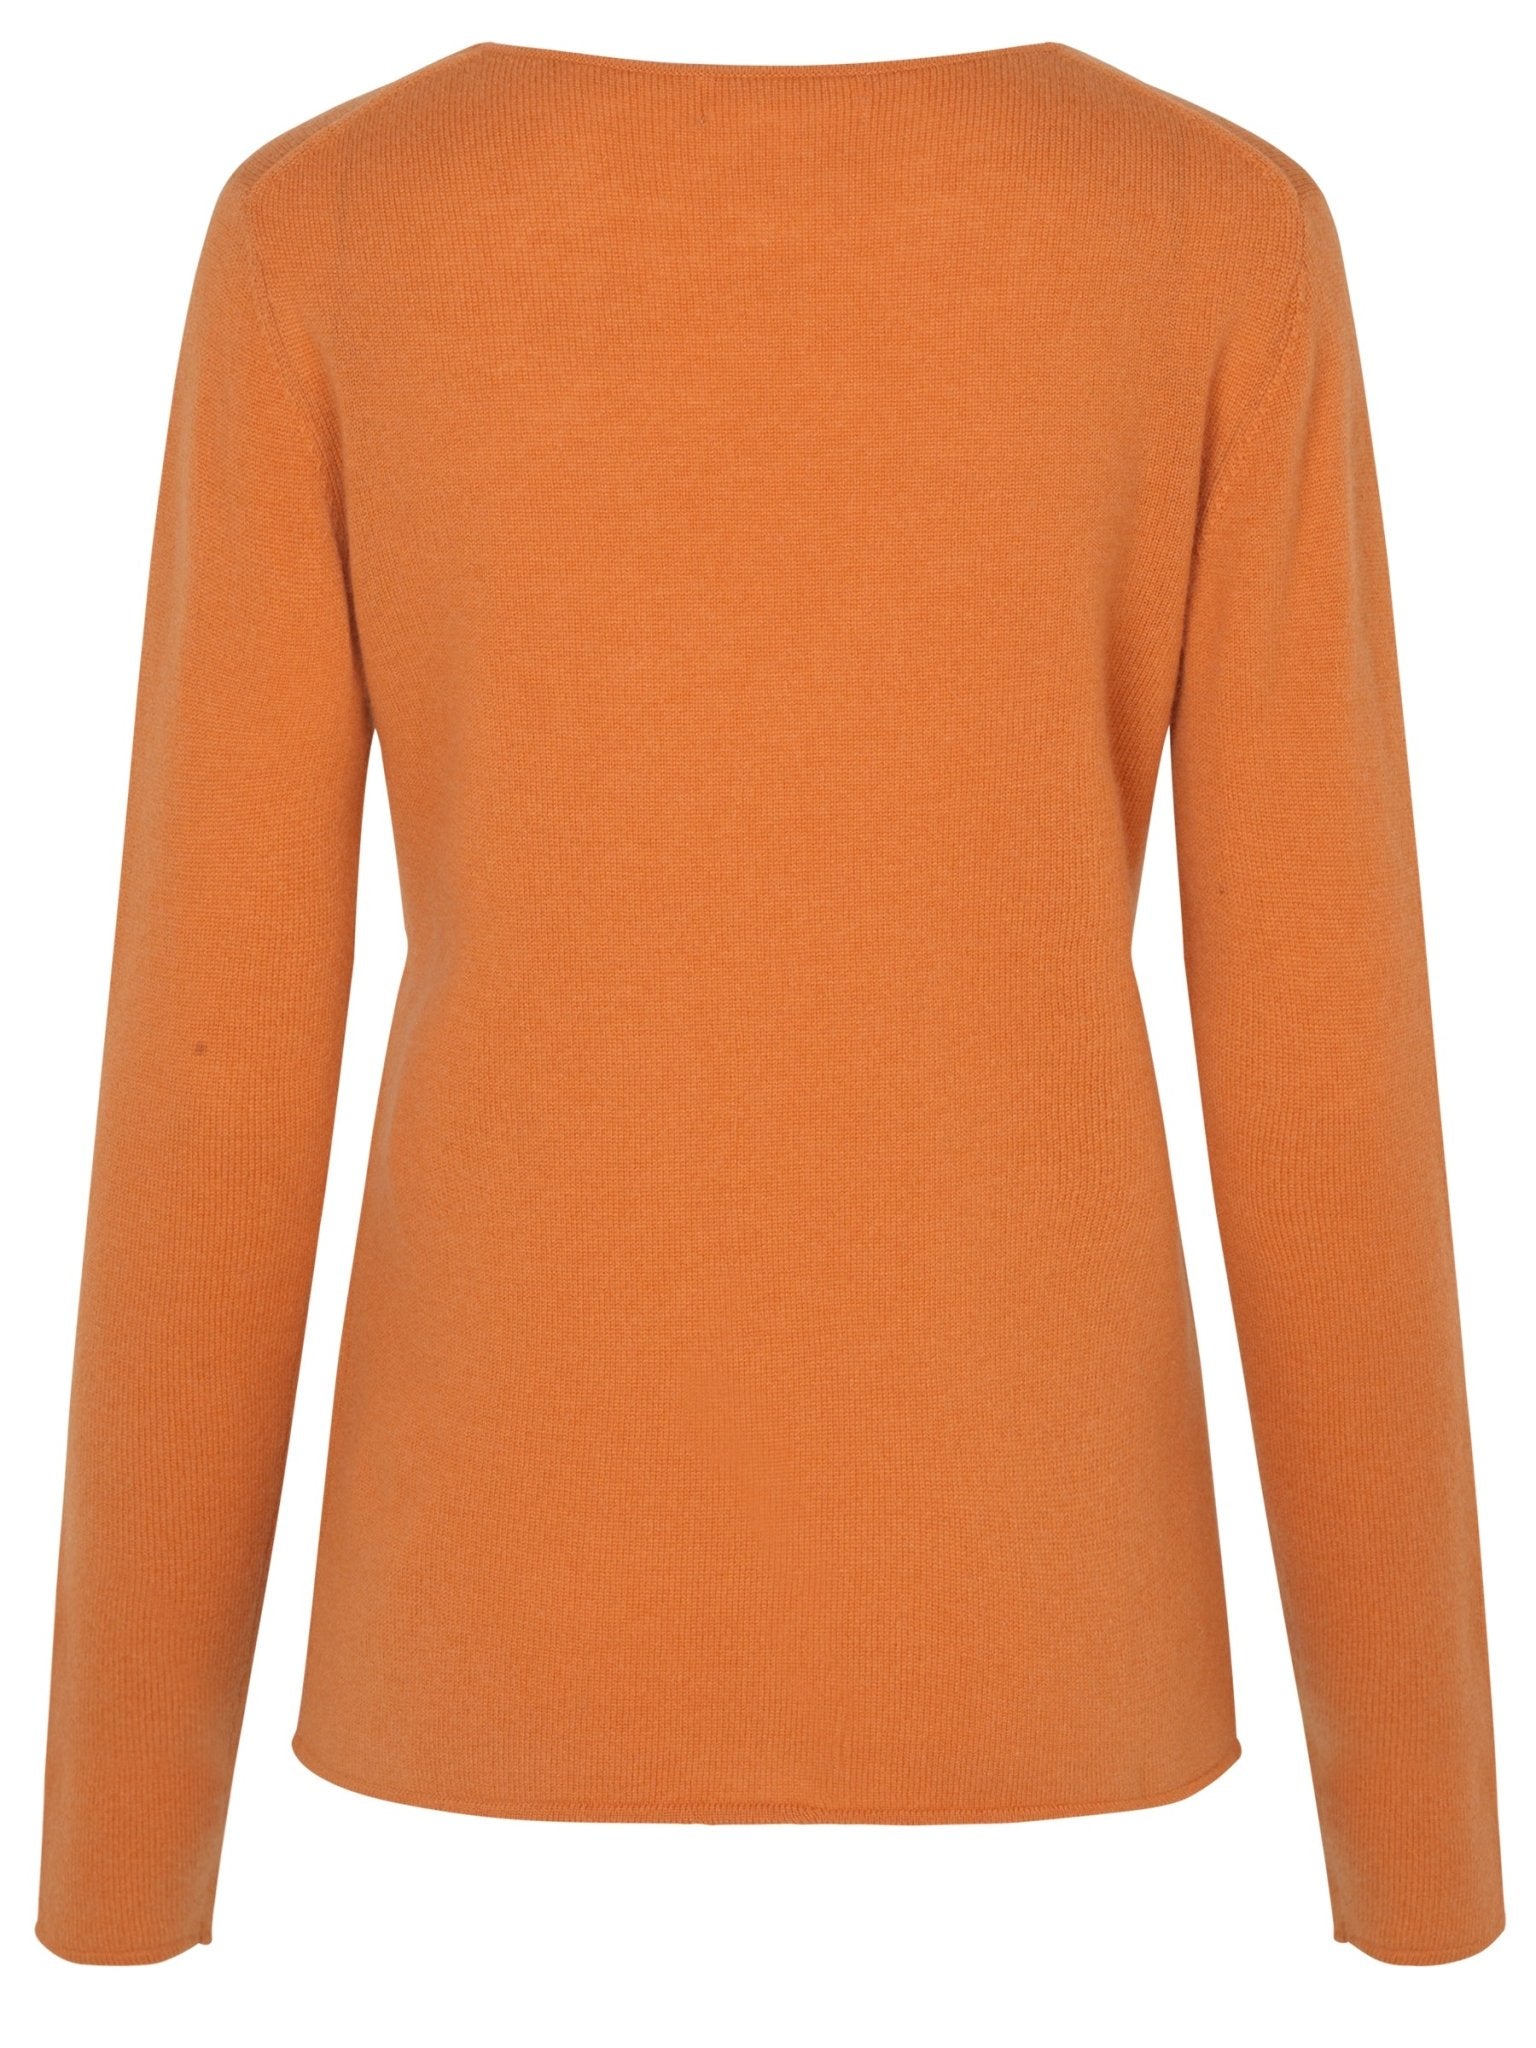 Shop Cashmere V-Knit | Dusty Orange - Rosemunde